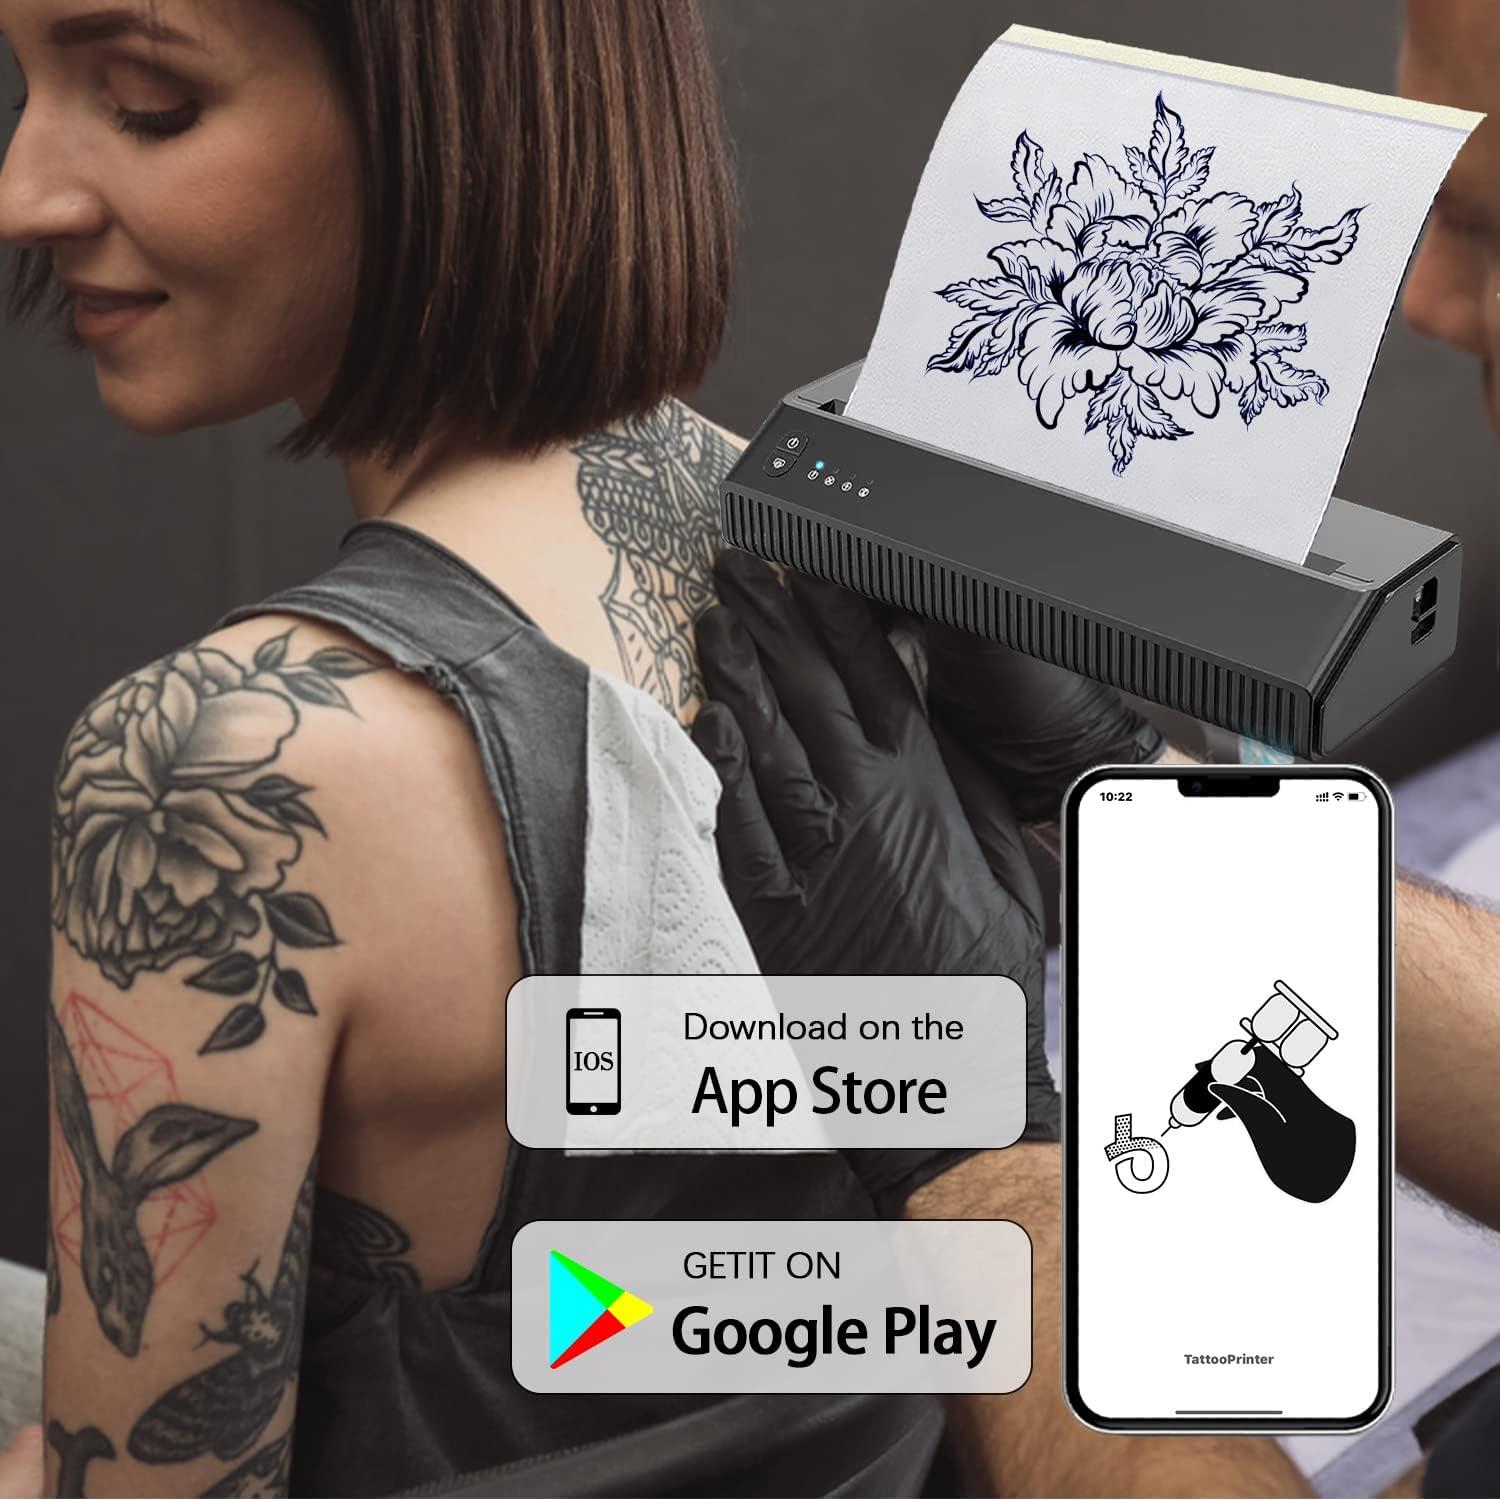 Bcetasy Cordless Thermal Tattoo Printer Portable Tattoo Stencil